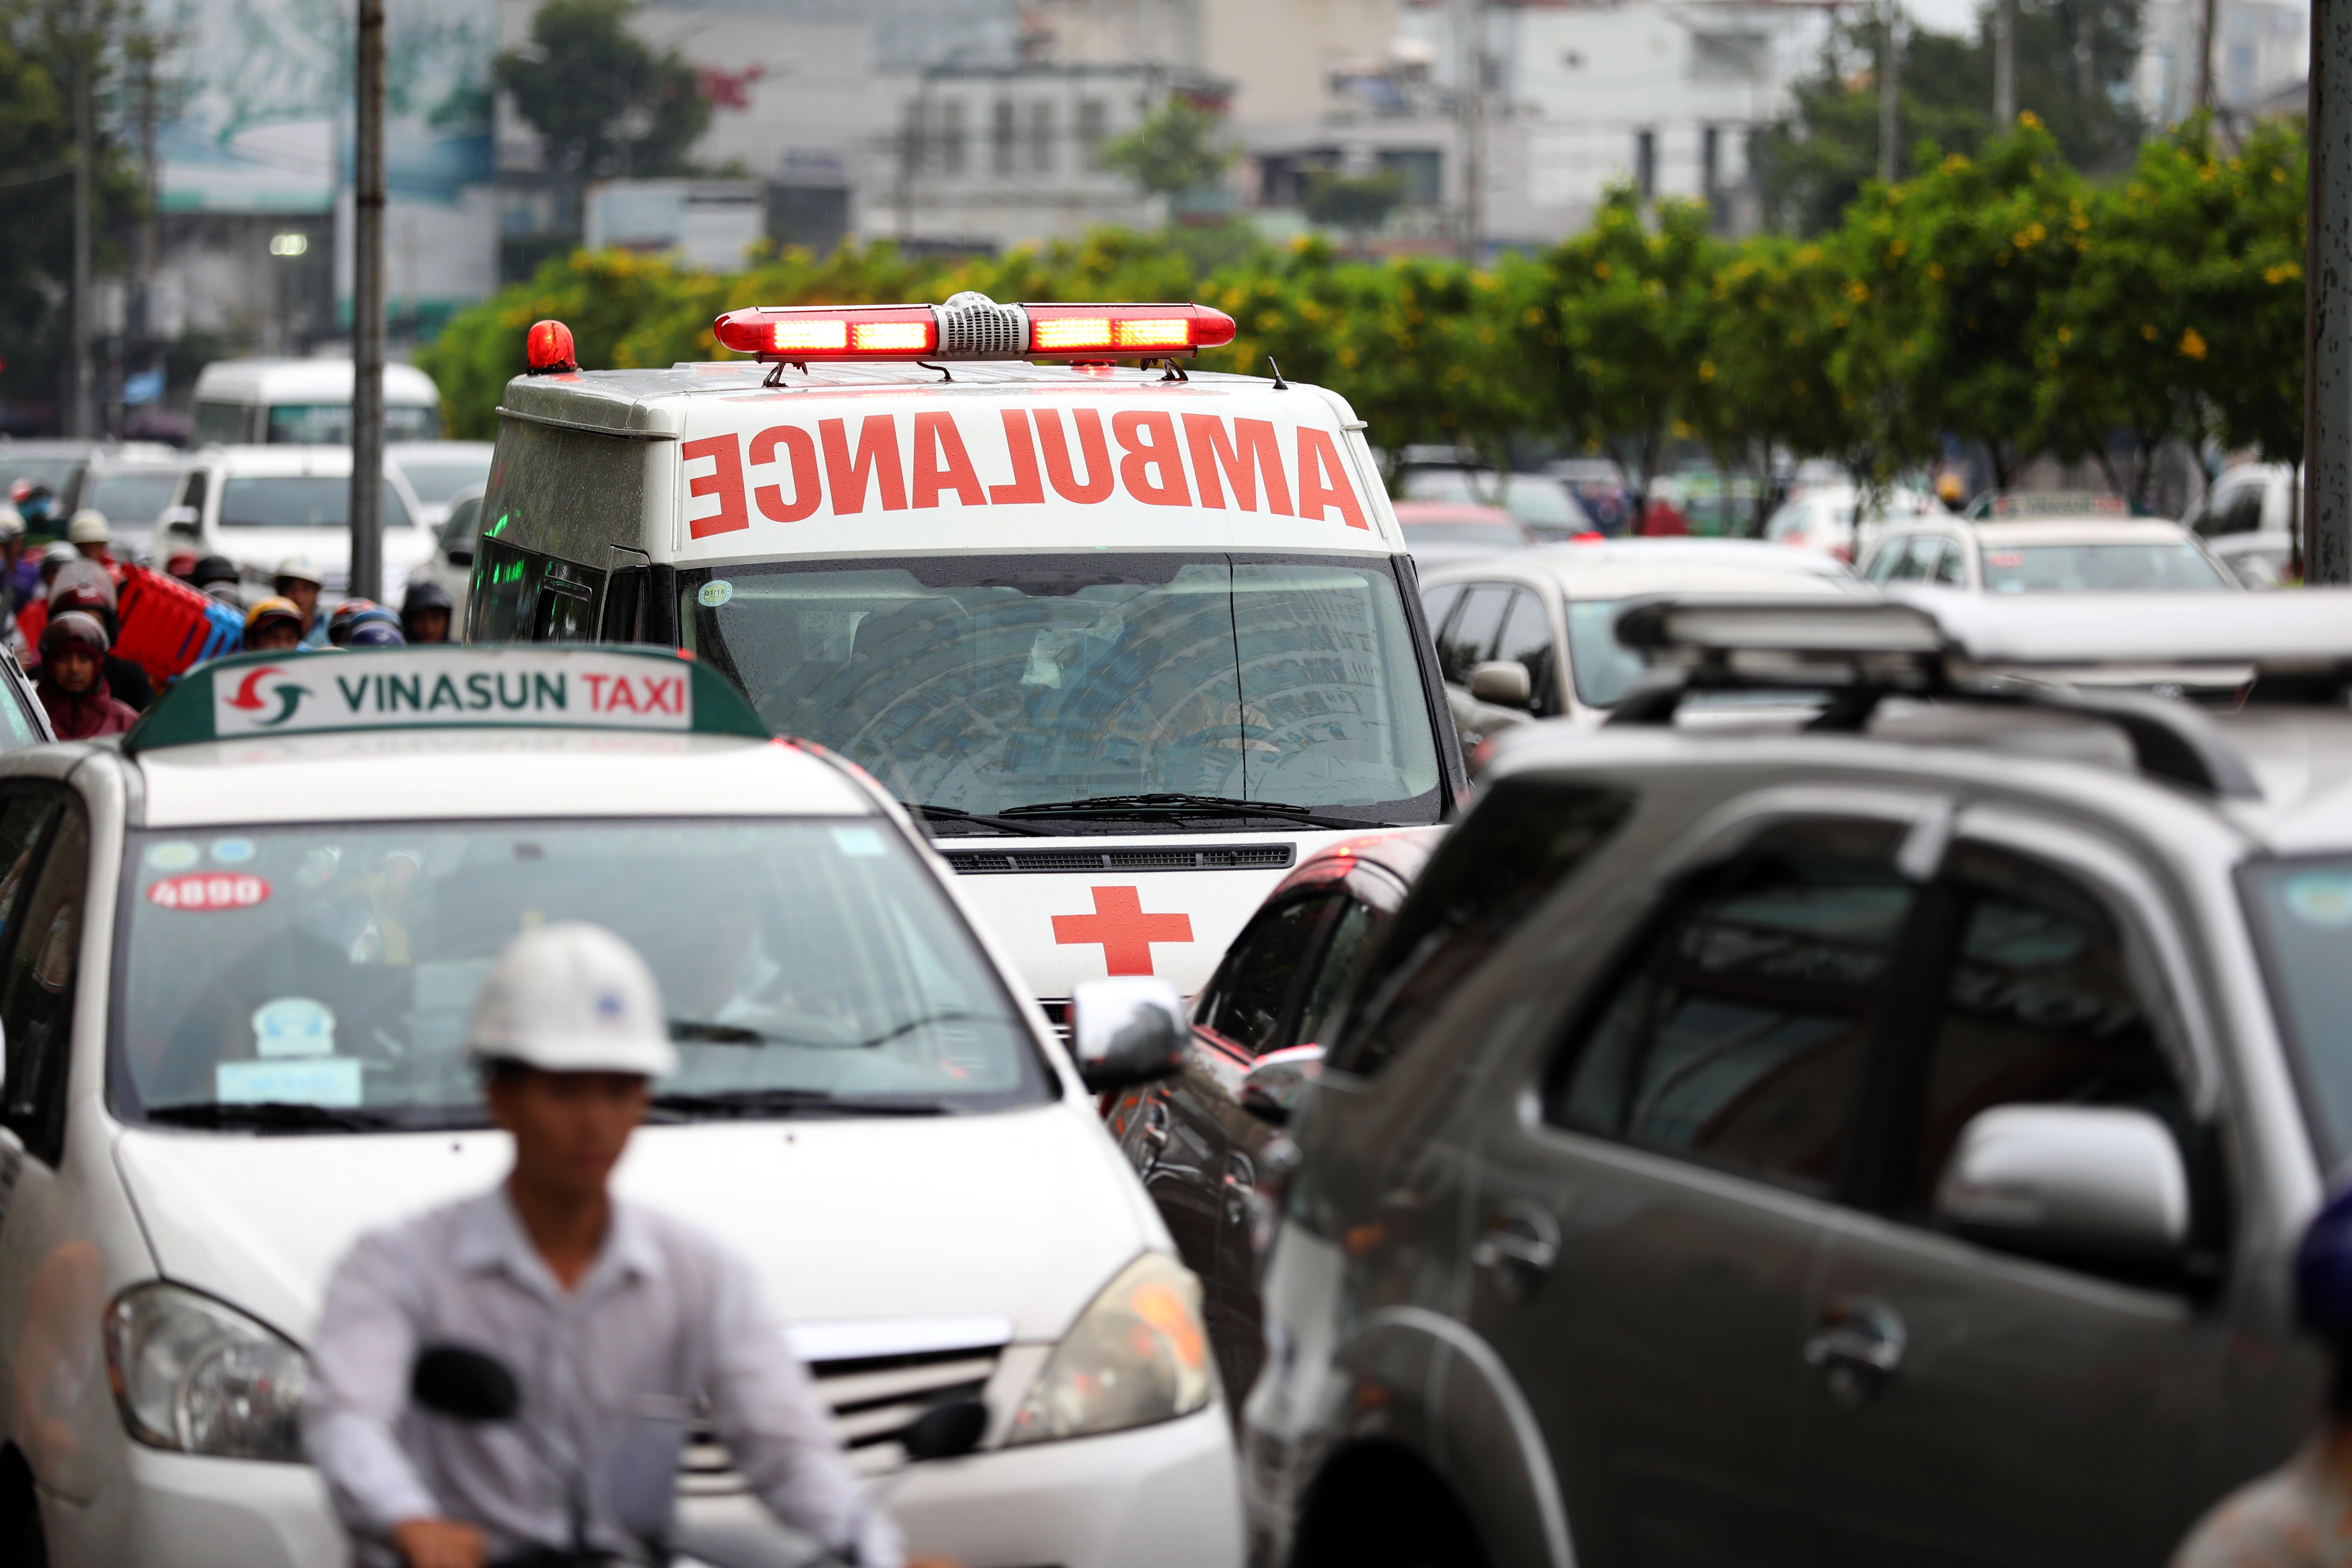 An ambulance battles traffic.